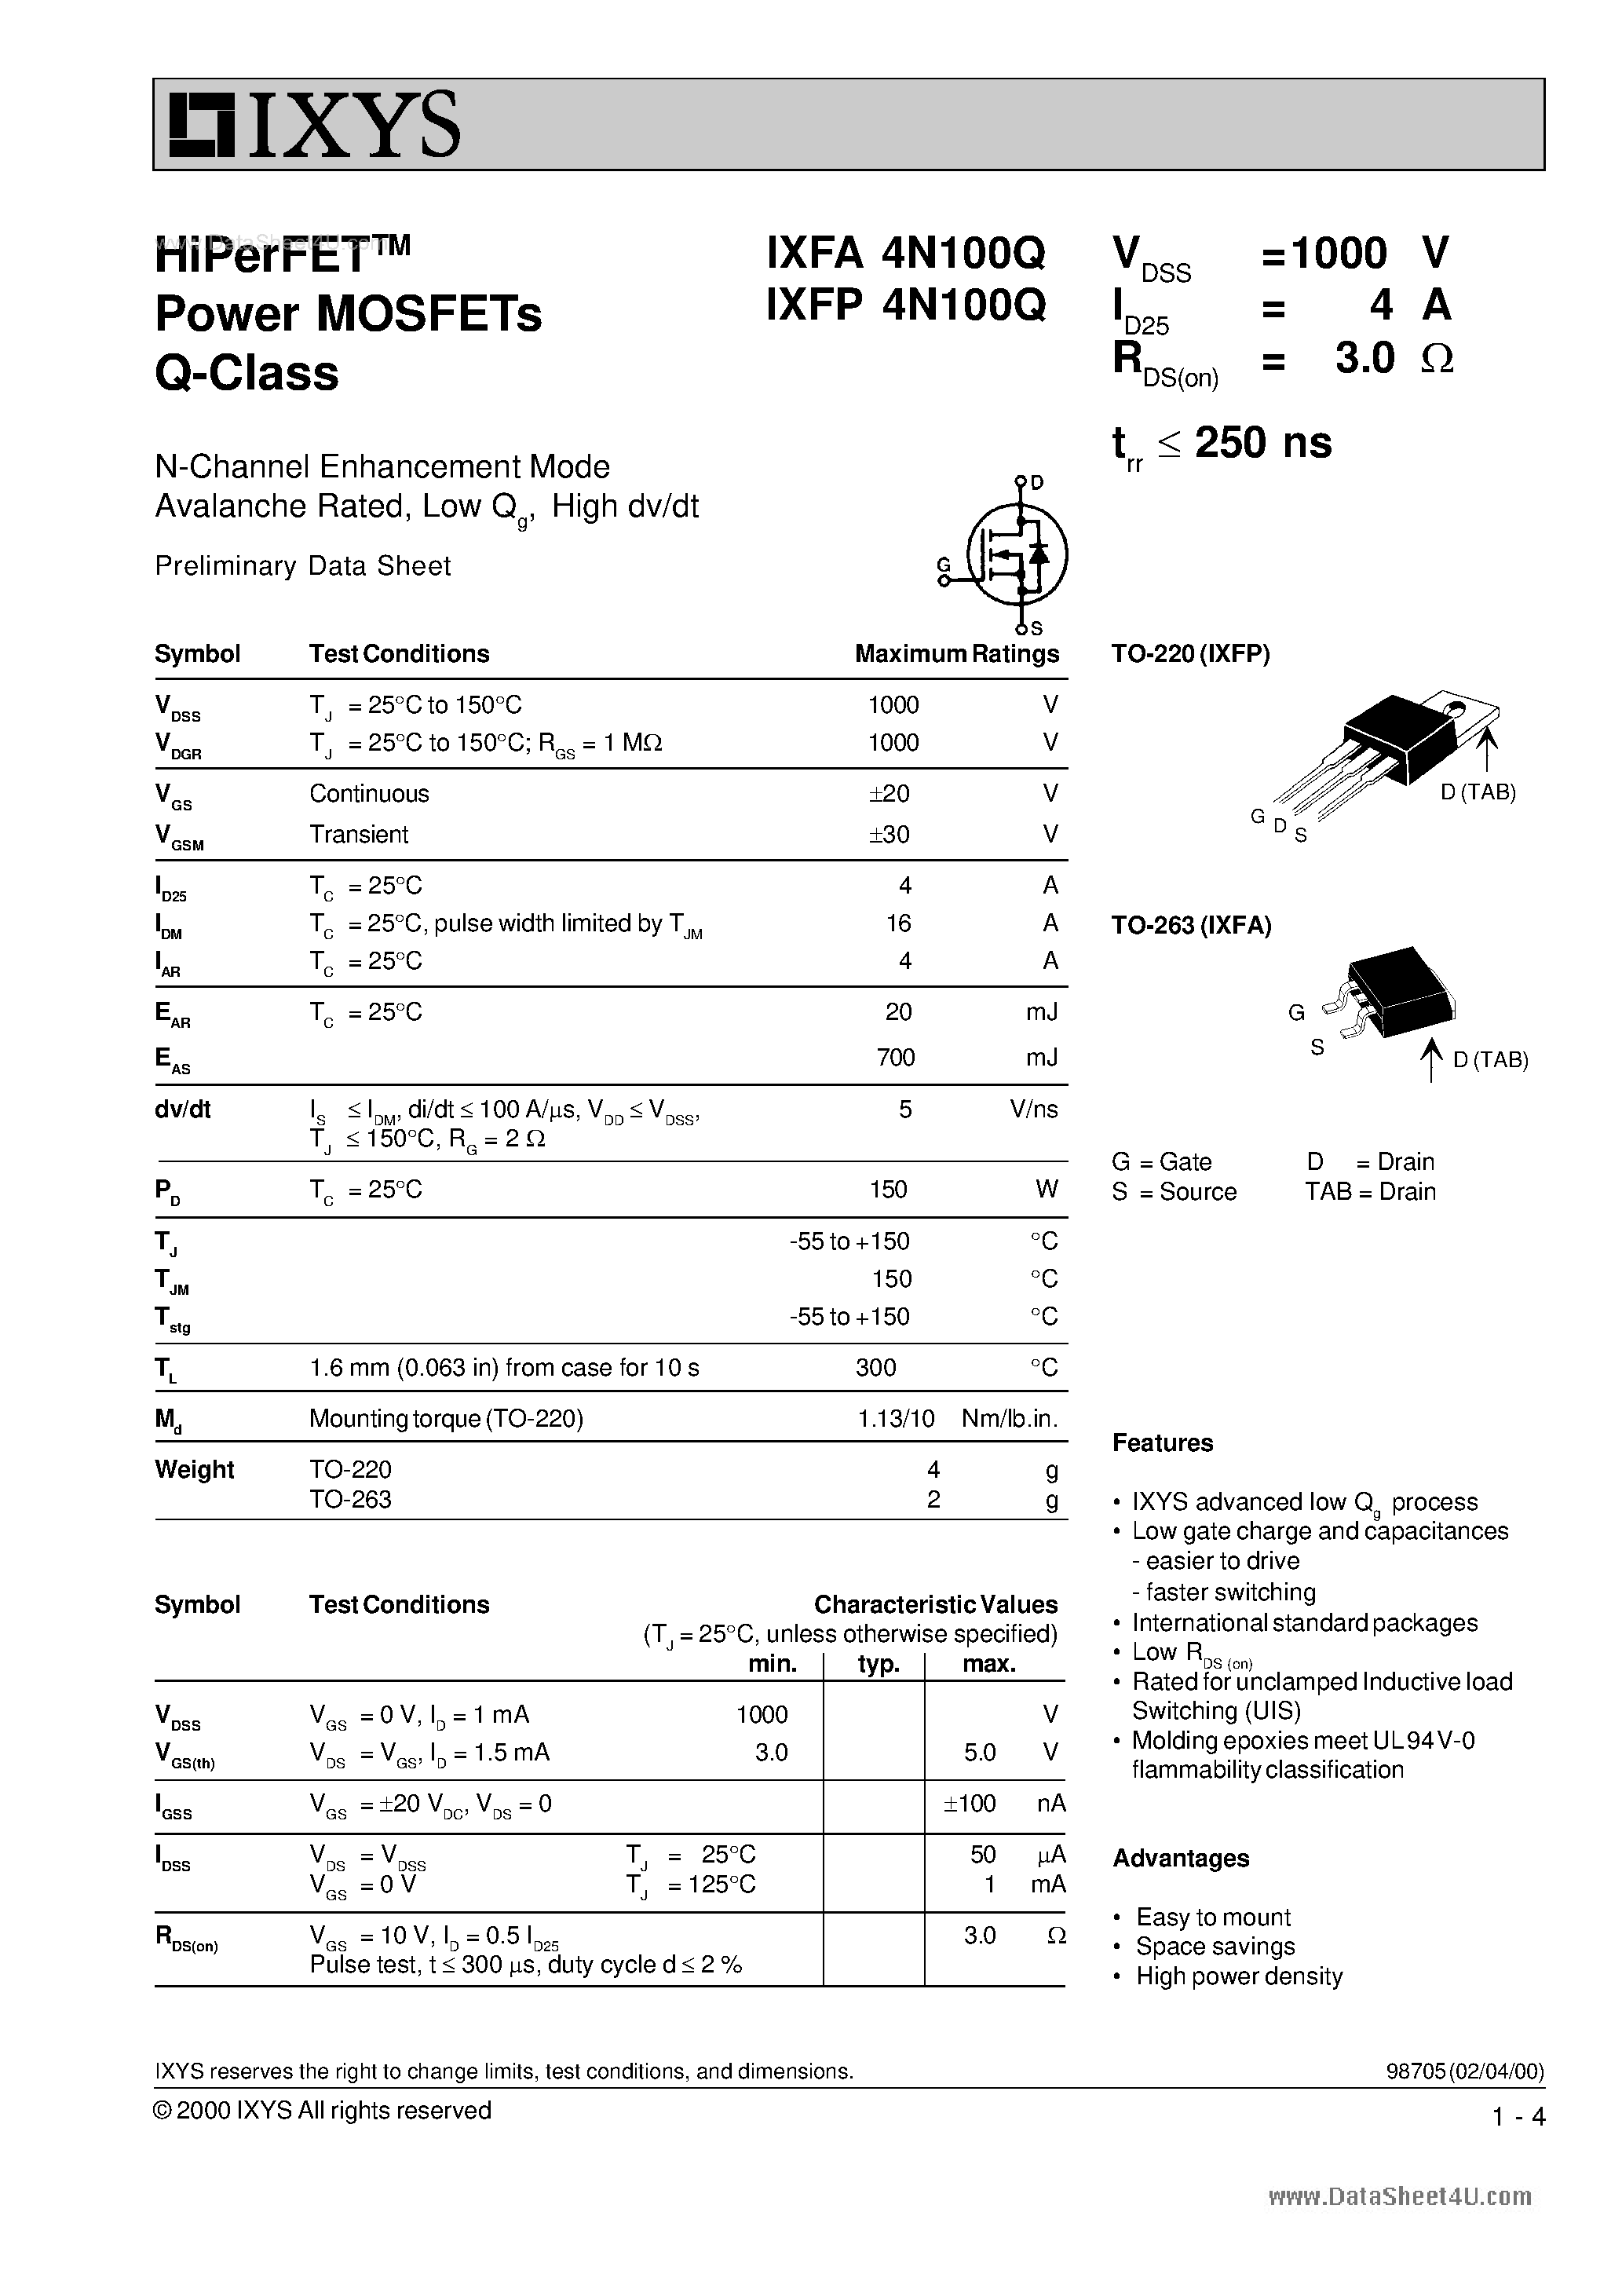 Datasheet IXFA4N100Q - HiPerFET Power MOSFETs Q-Class page 1